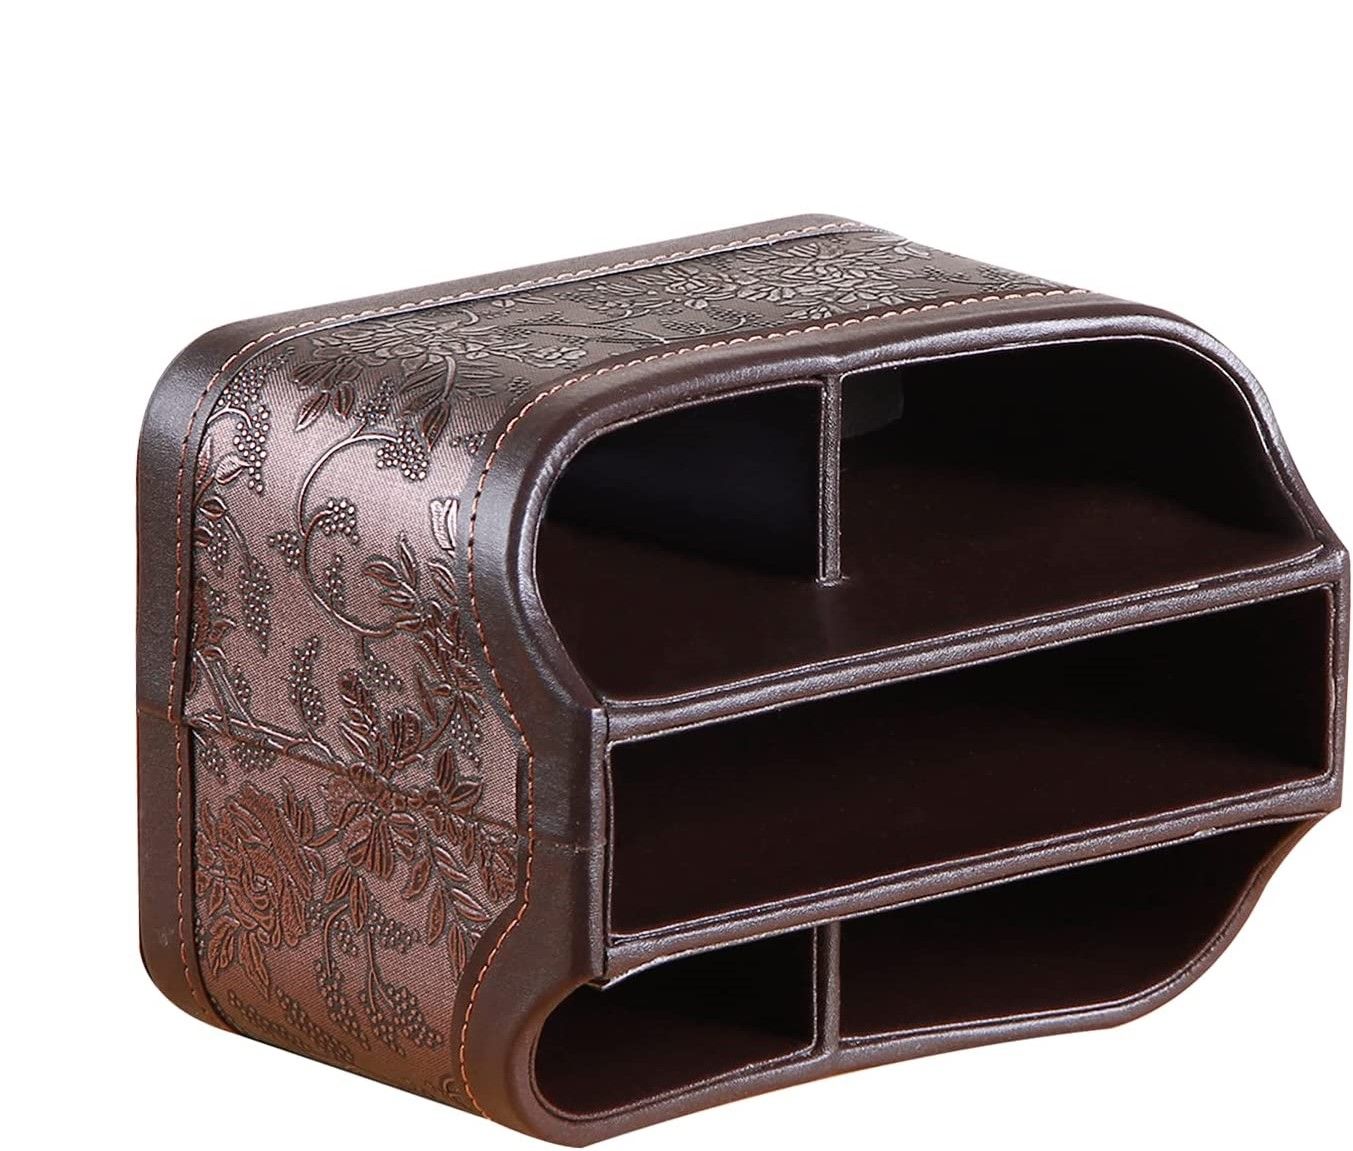 Yapishi Antique Leather Remote Caddy best cute TV accessories